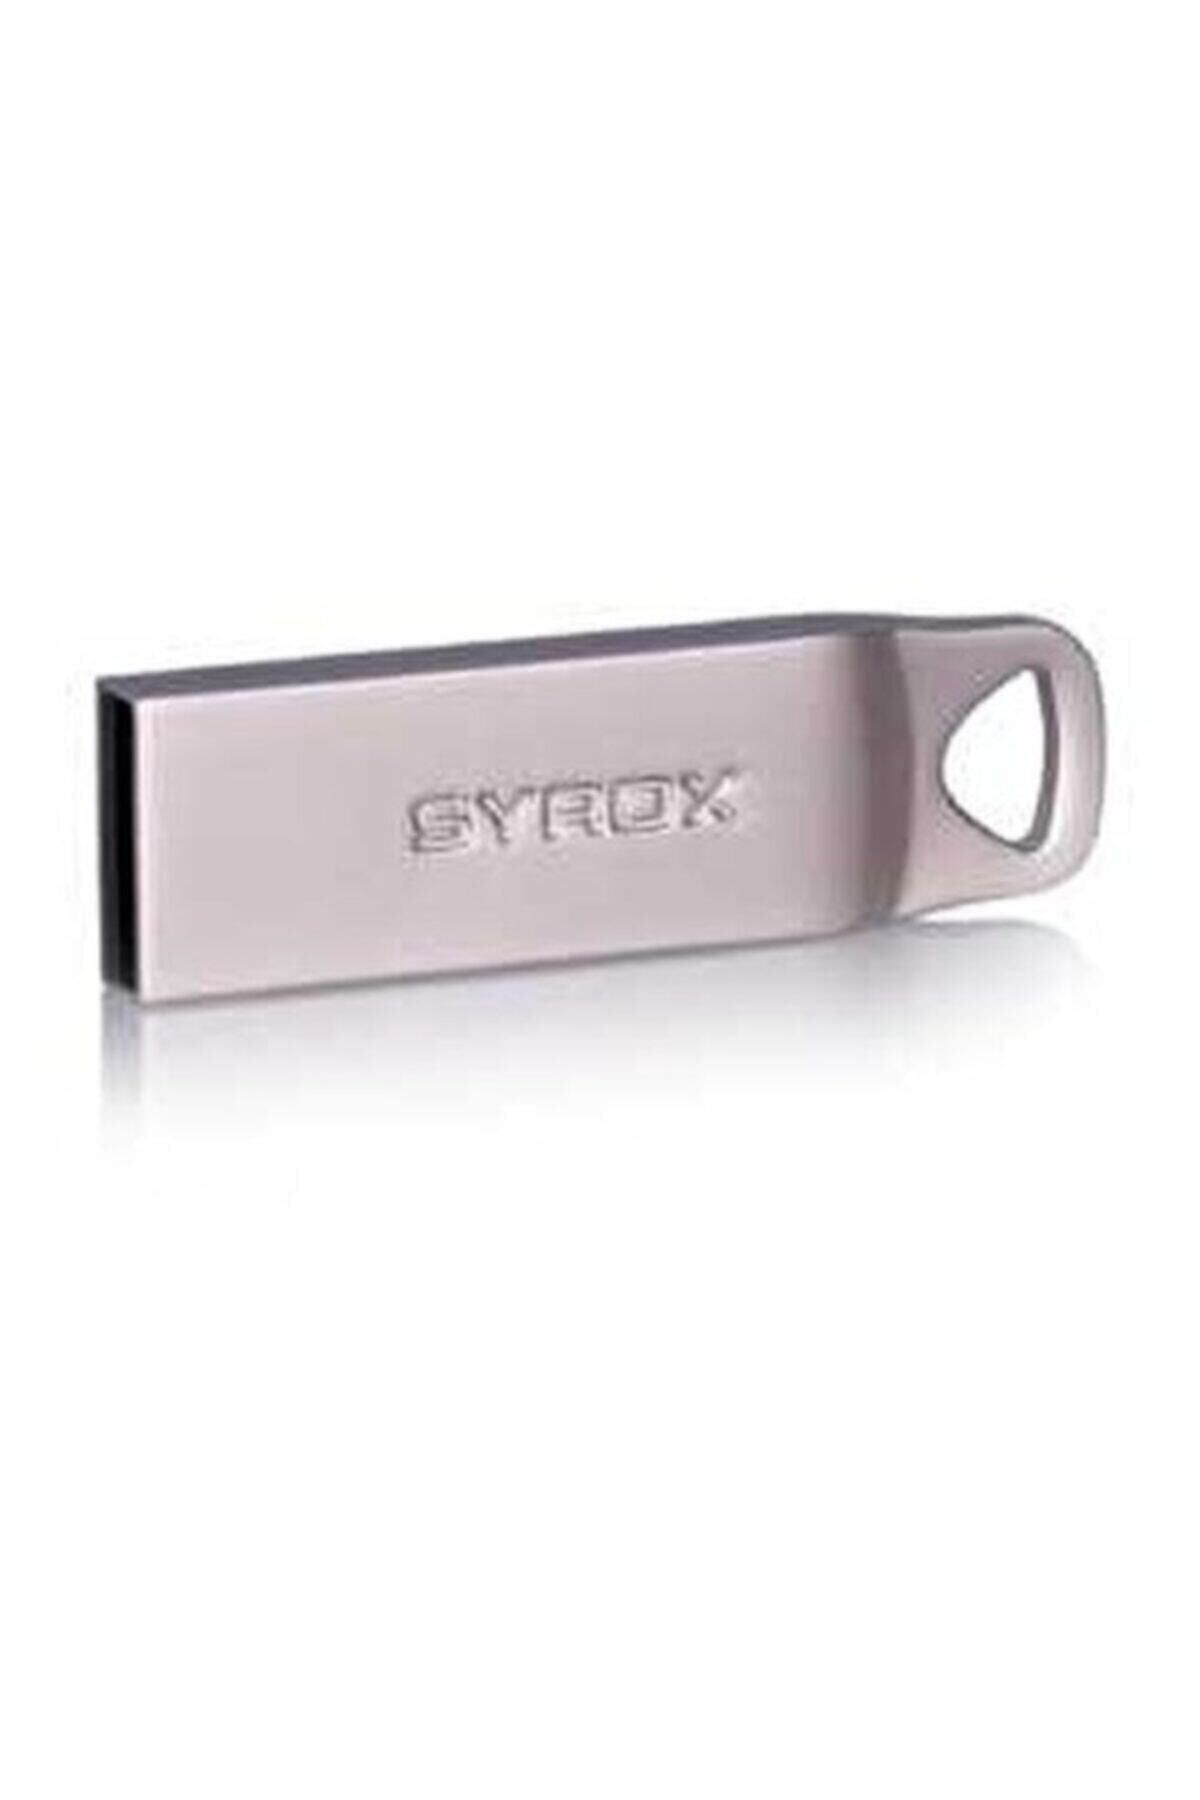 Syrox 128 Gb Metal Usb Flash Bellek